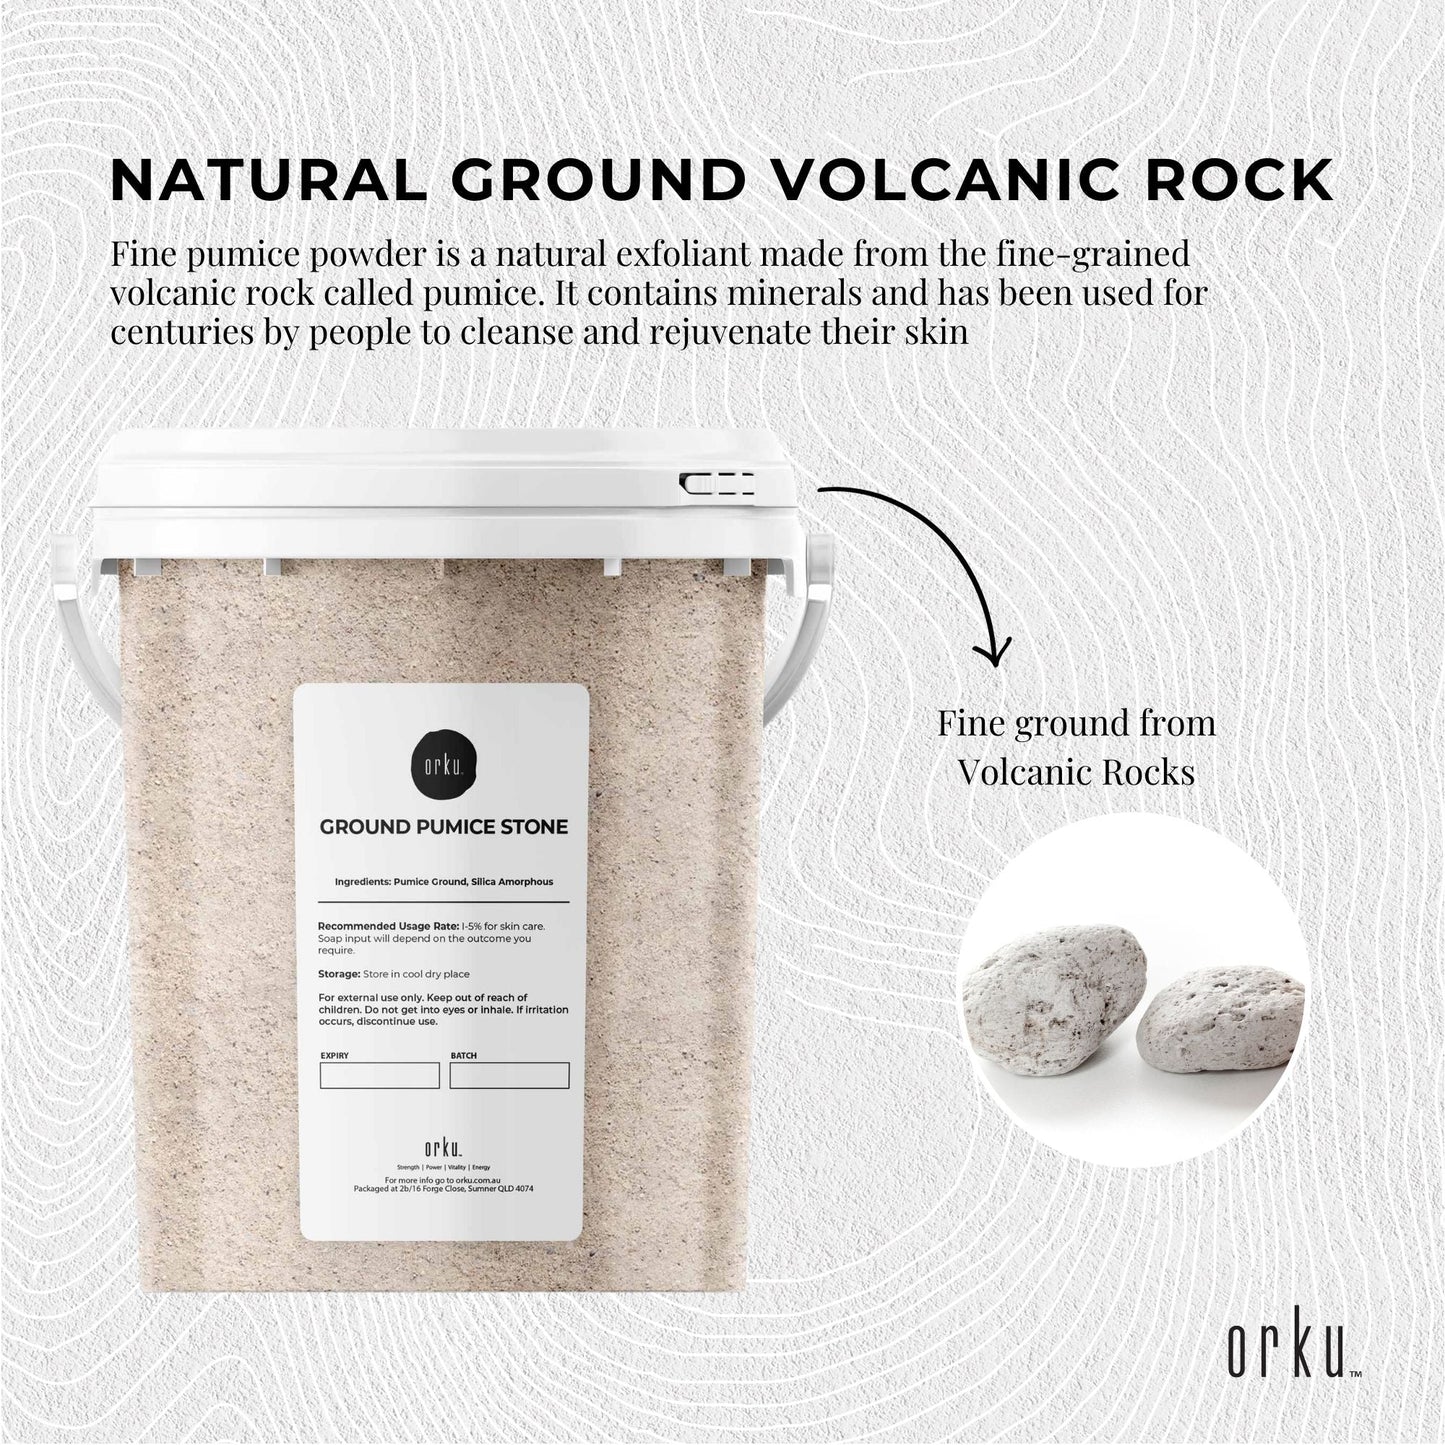 Ground Pumice Stone Granular Powder Tub Eco Exfoliant Body Scrub Soap Additive